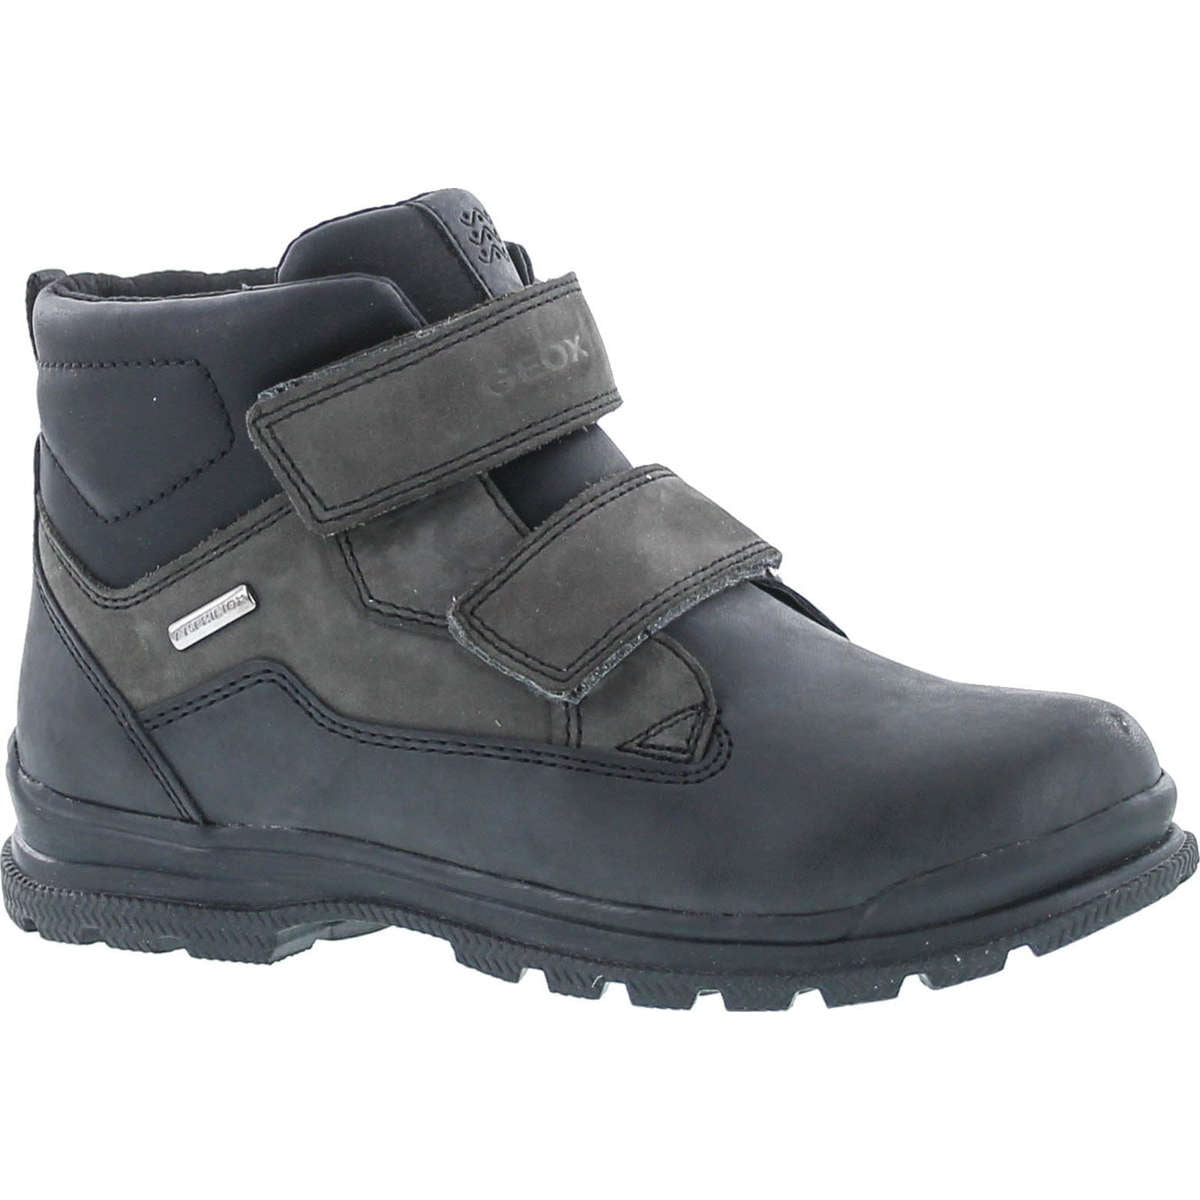 GEOX Boys William Casual Winter Boots, Dark Grey/Black, 39 - Walmart.com